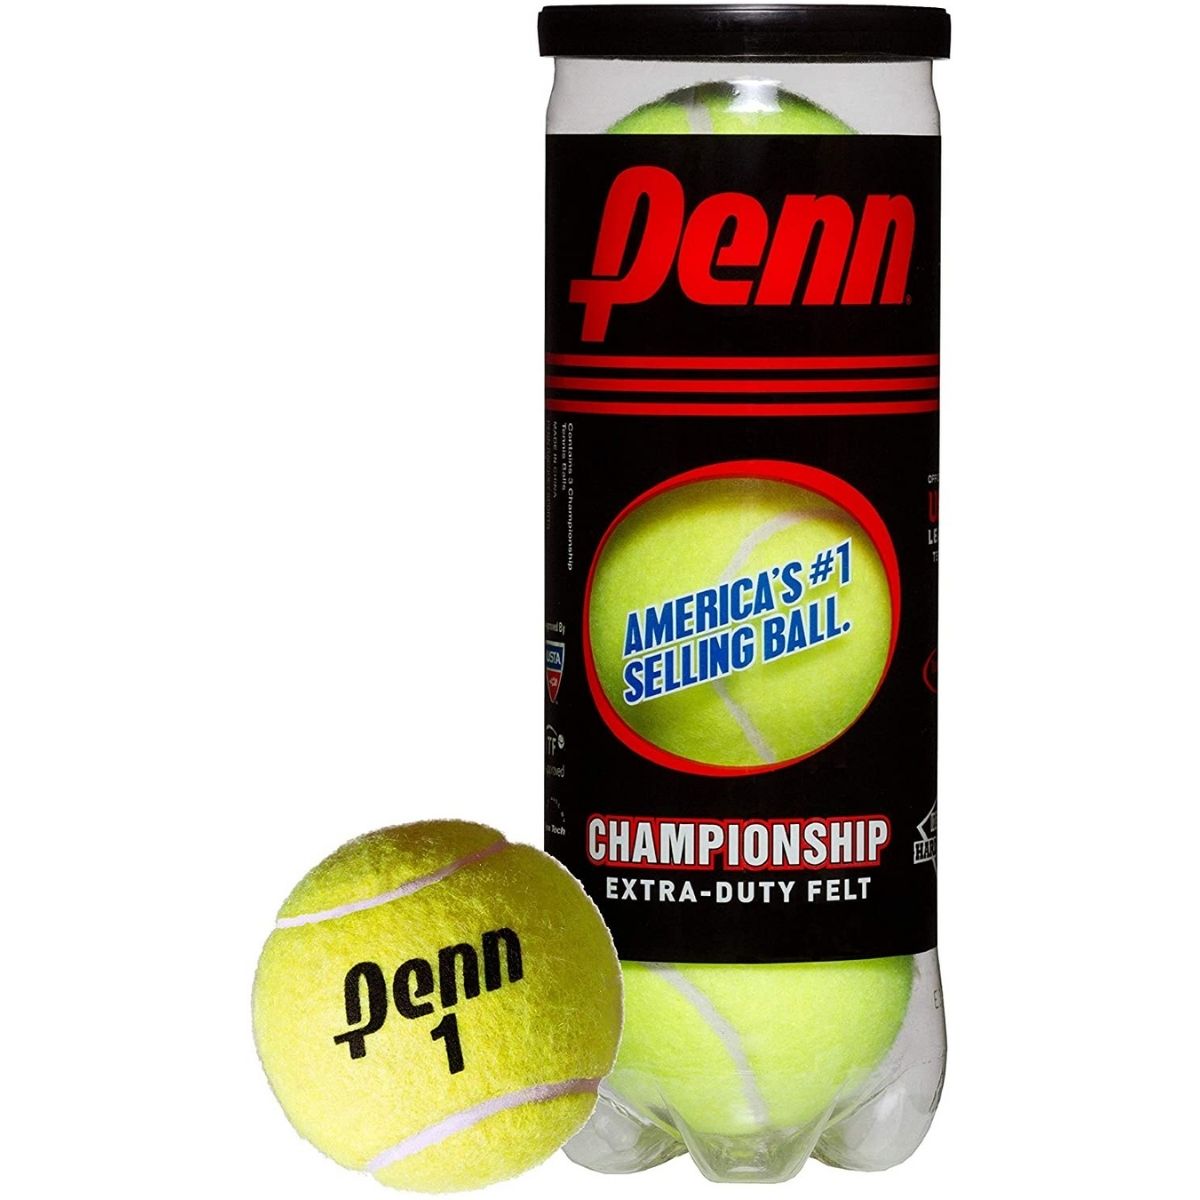 penn championship tennis balls extra duty felt